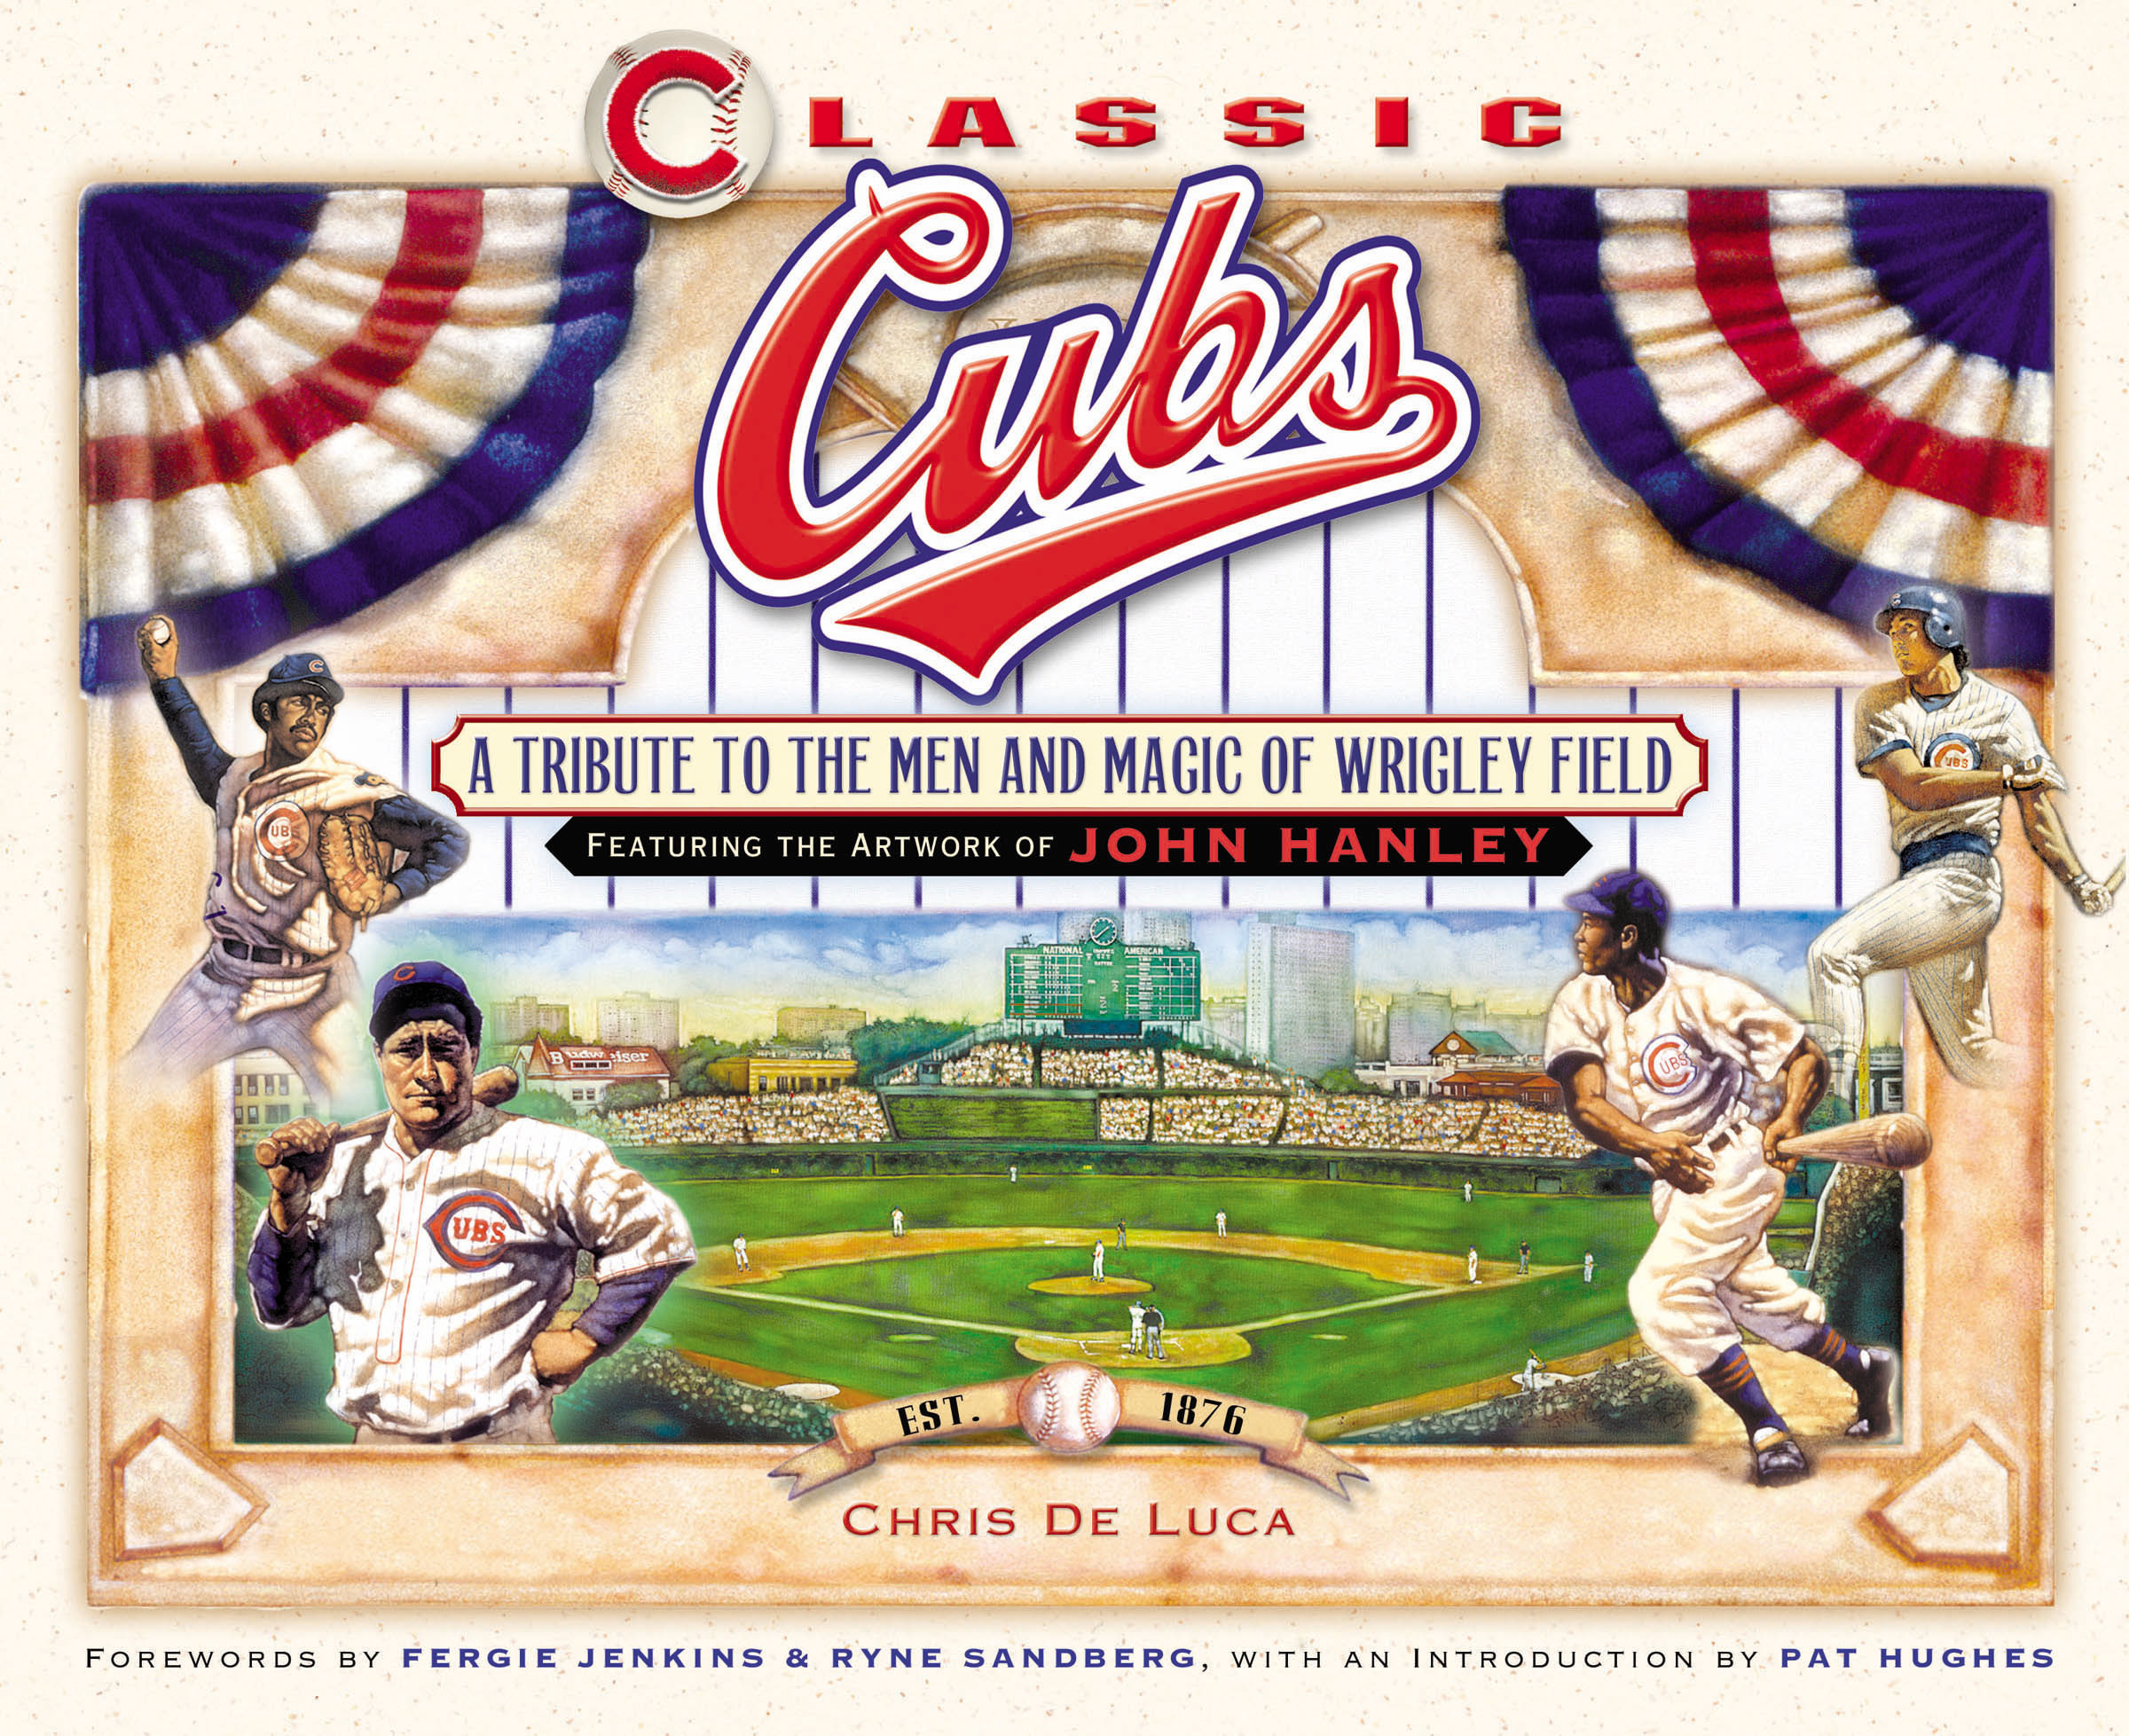 2400x1957 Wallpaper Chicago Cubs